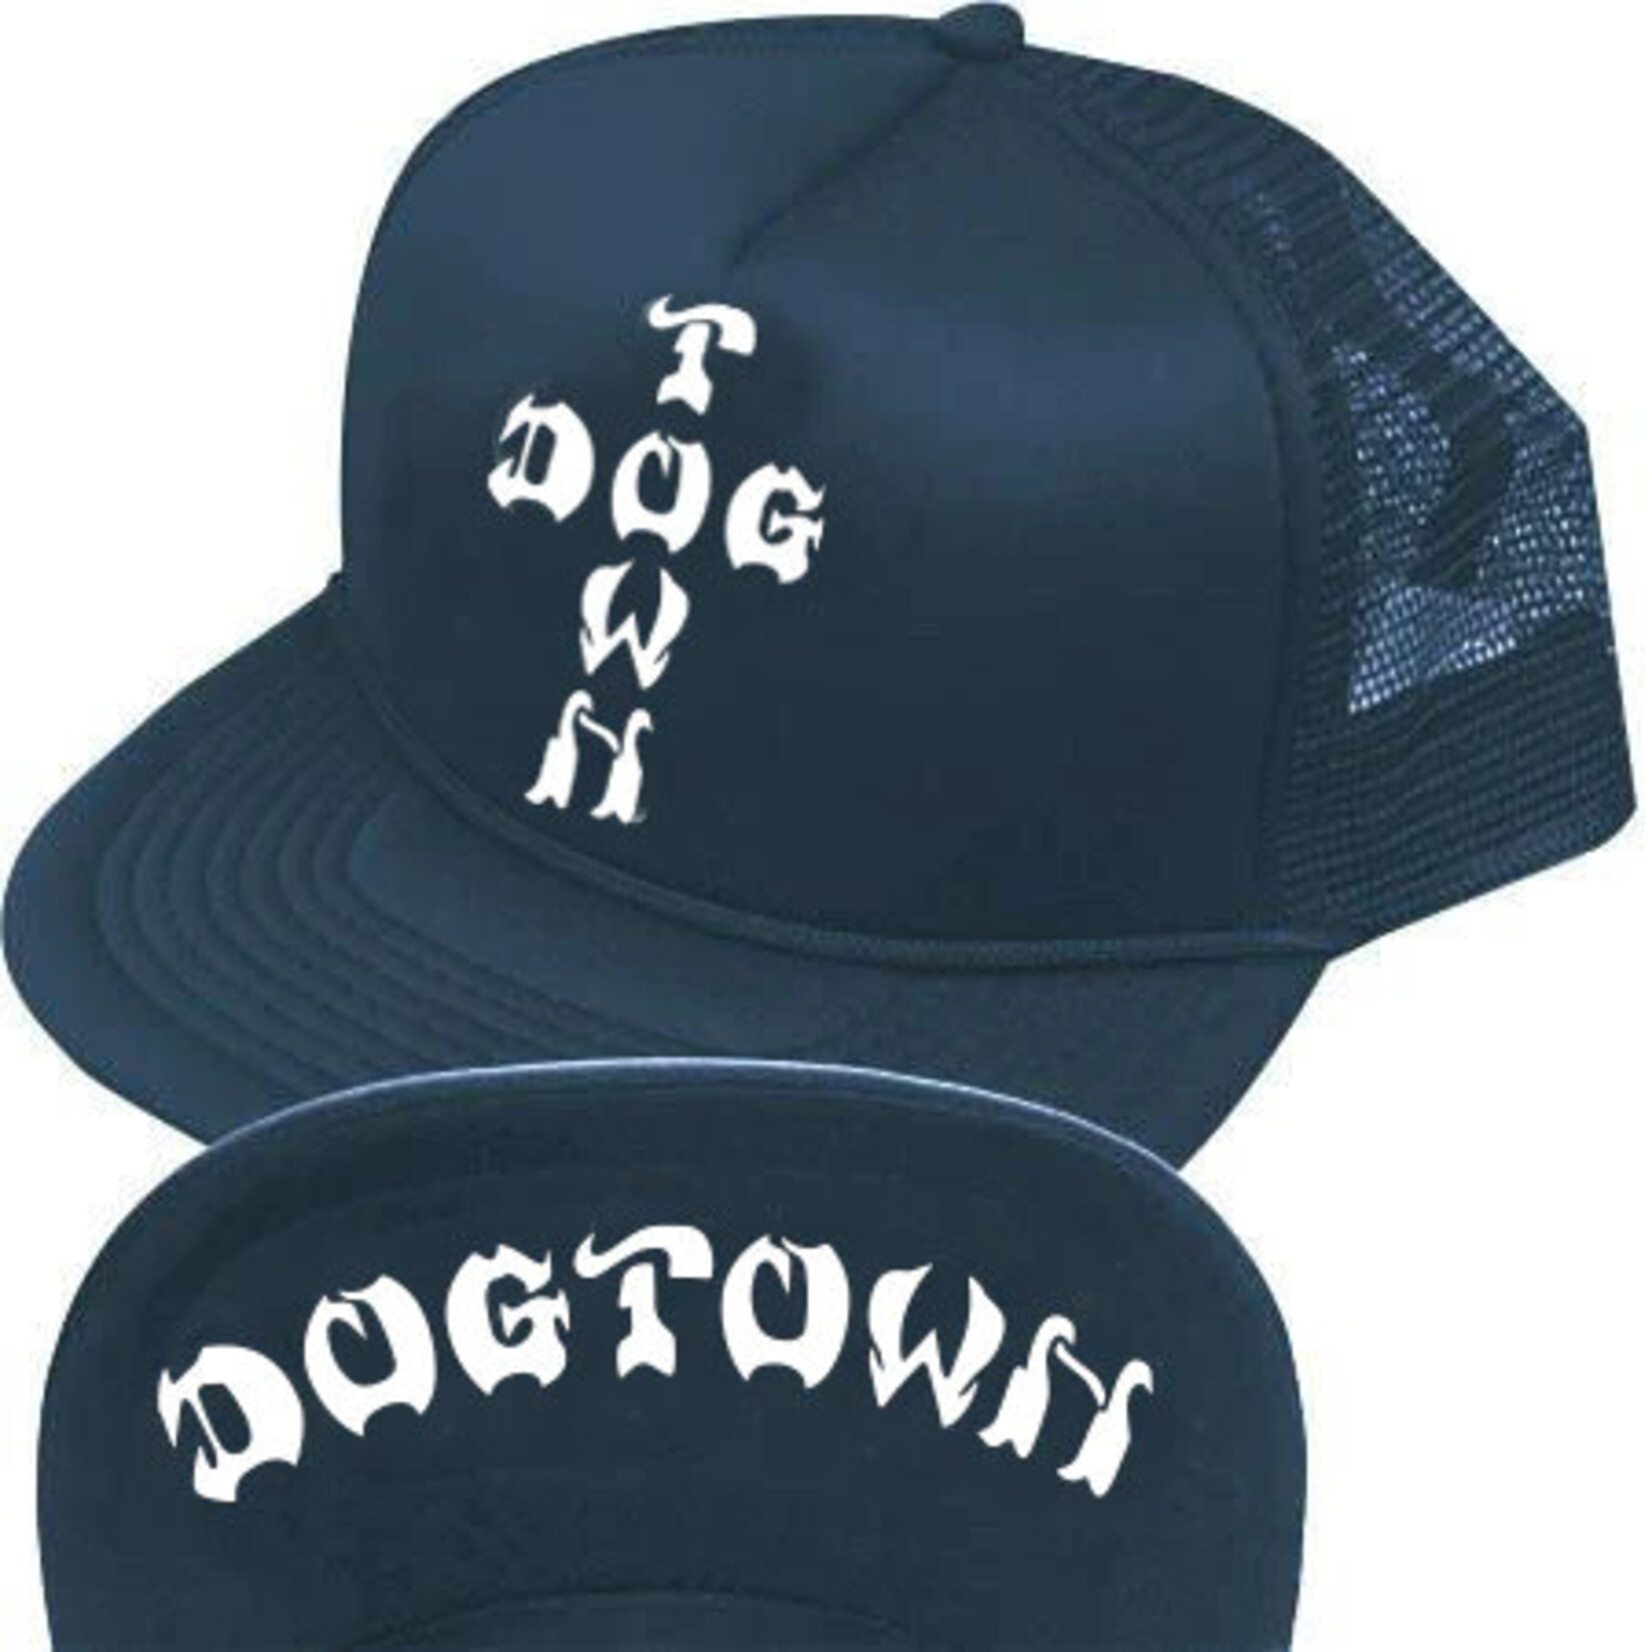 Dogtown Dogtown Cross Letters Flip Mesh Hat - Navy